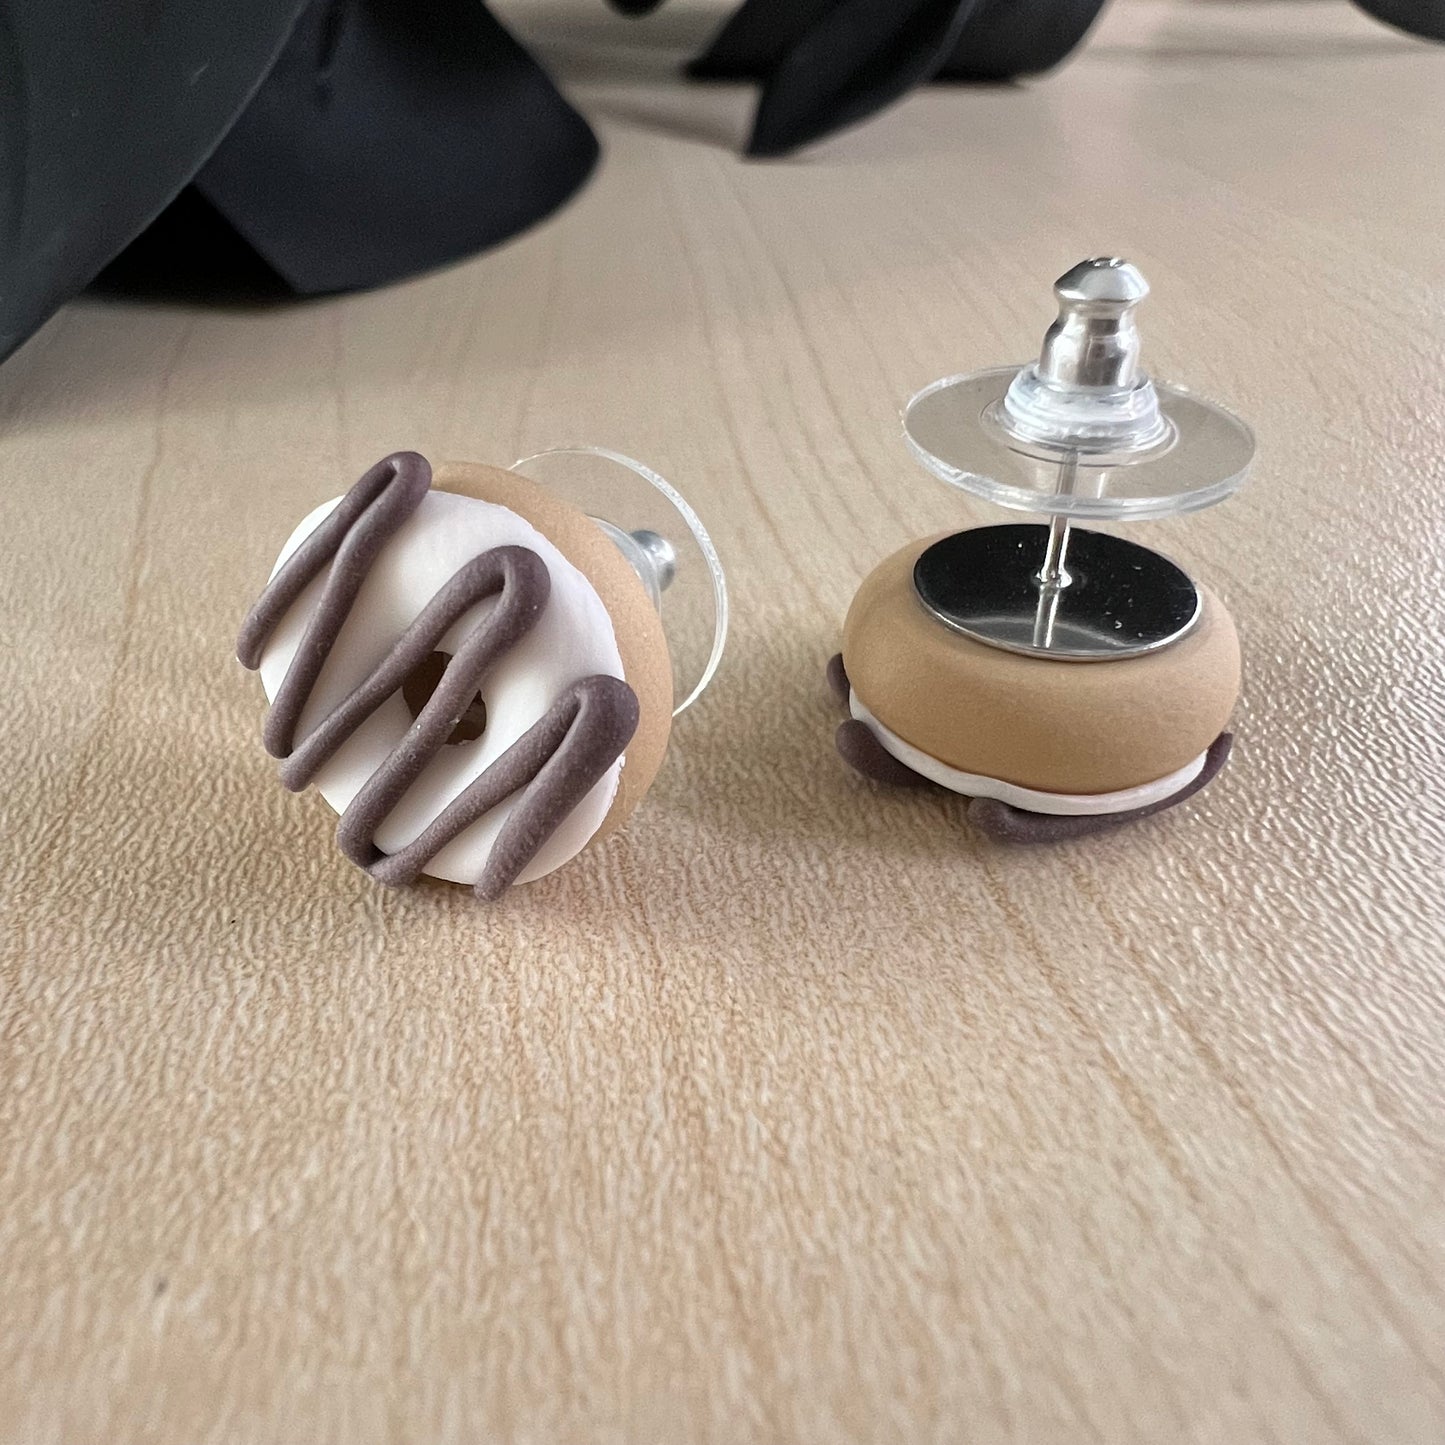 Iced donut studs, white vanilla, brown chocolate drizzle, handmade earrings